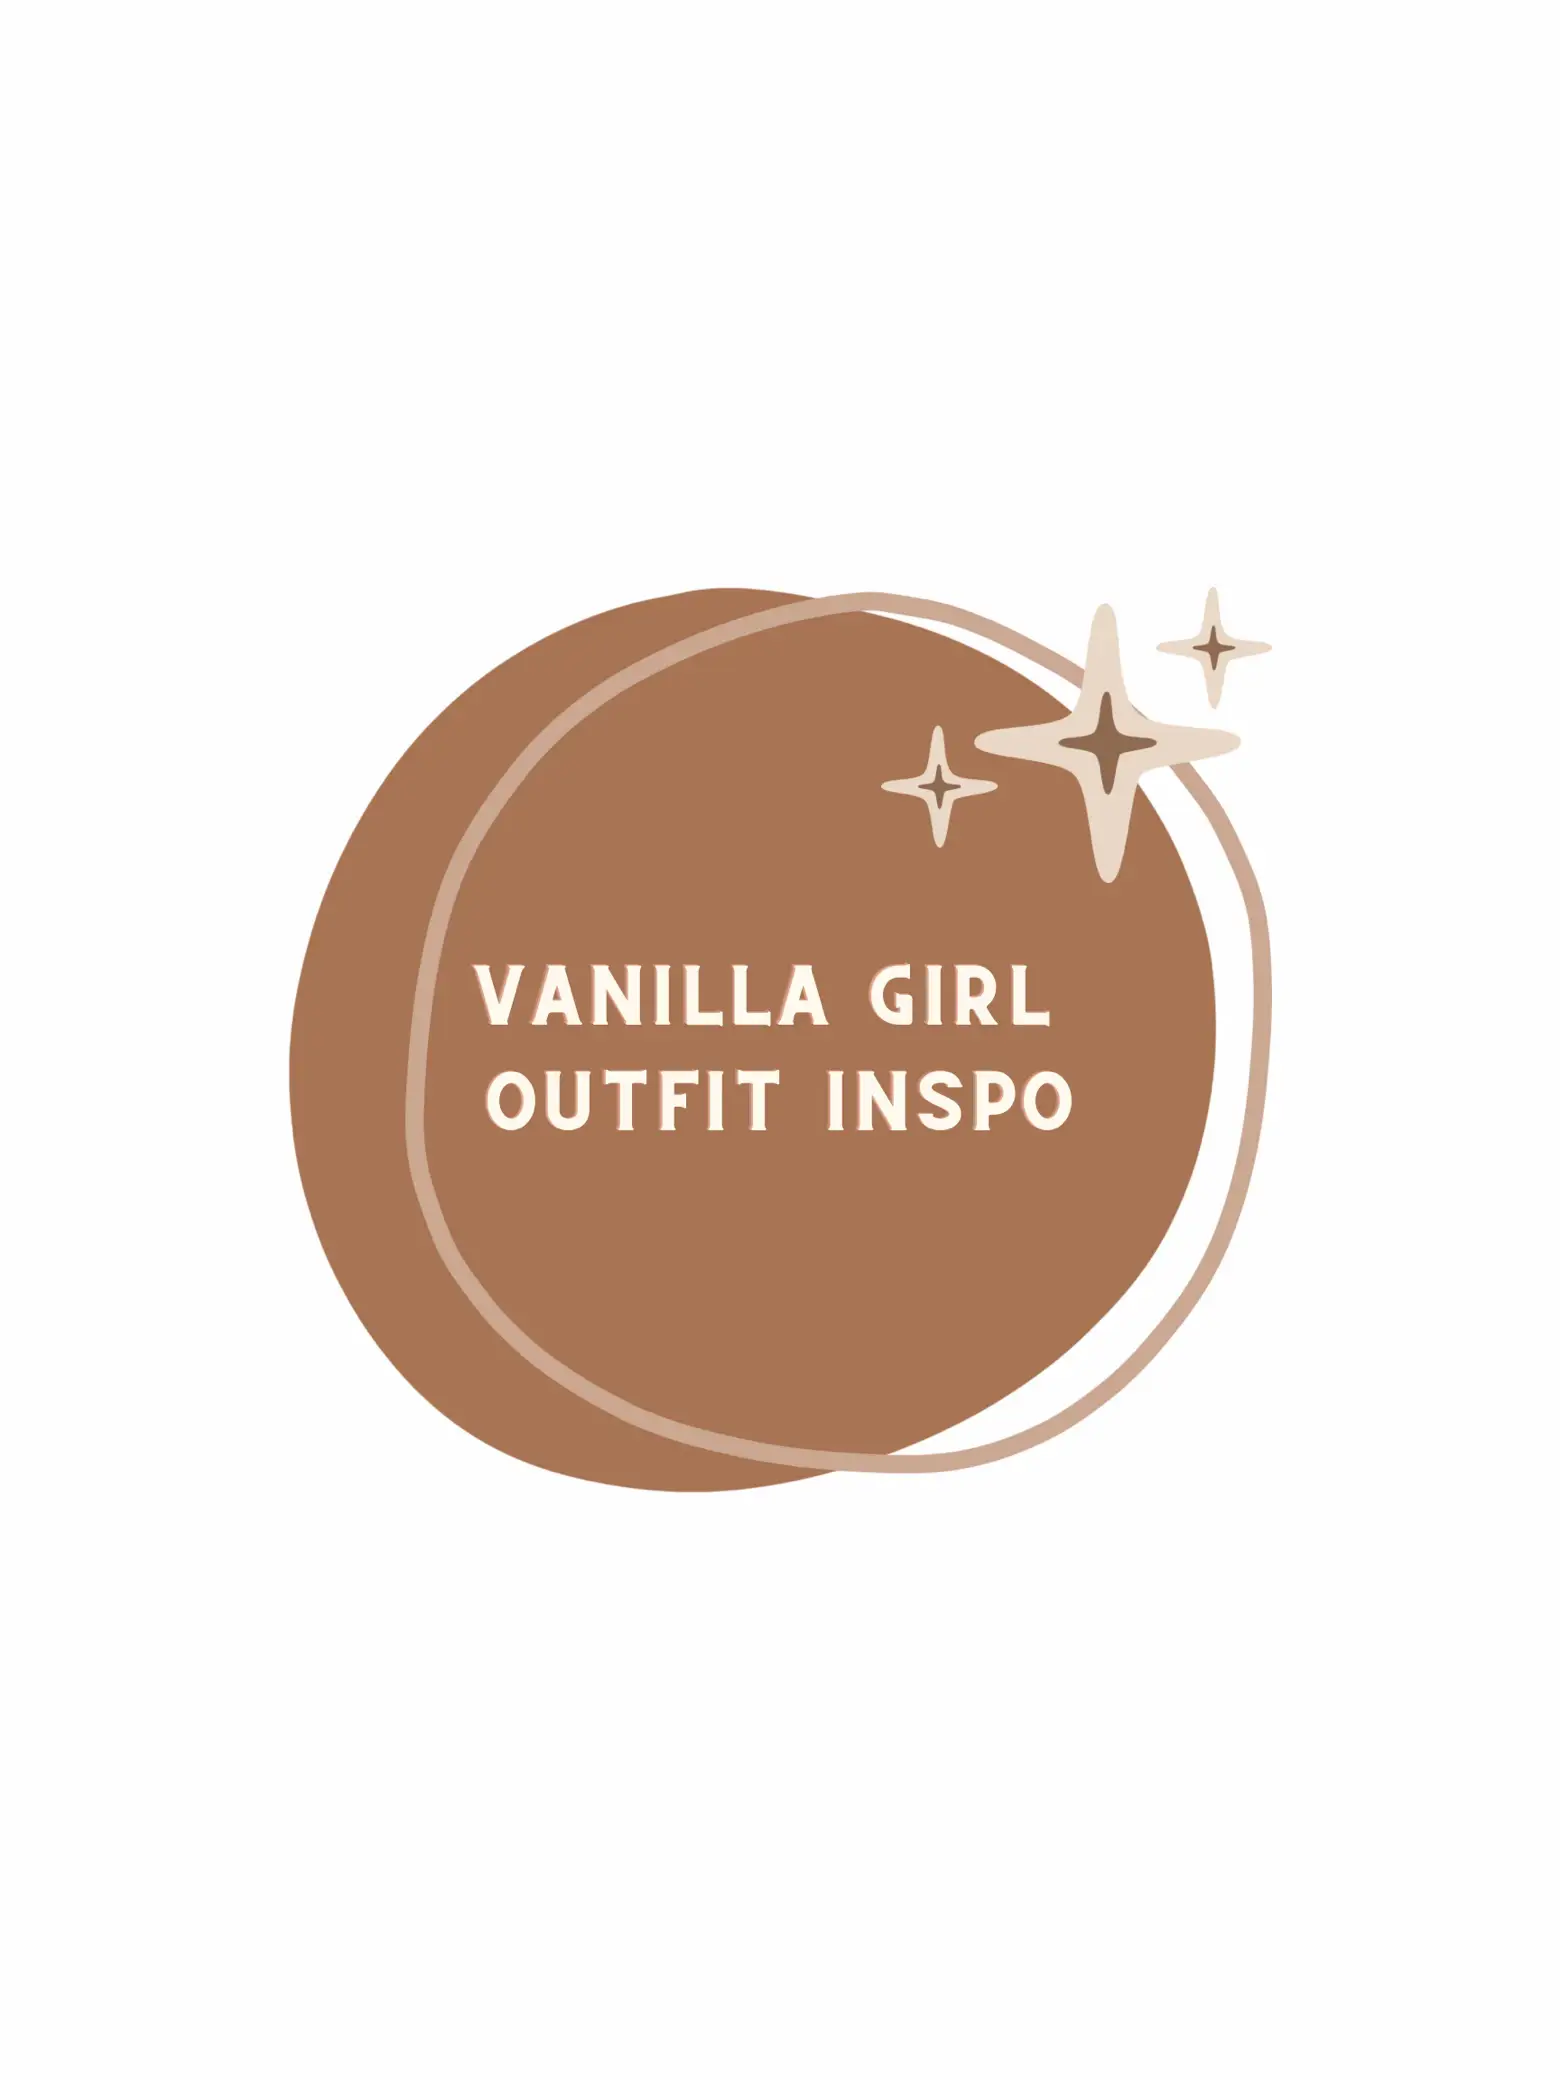 Vanilla Girl Pacsun - Lemon8 Search